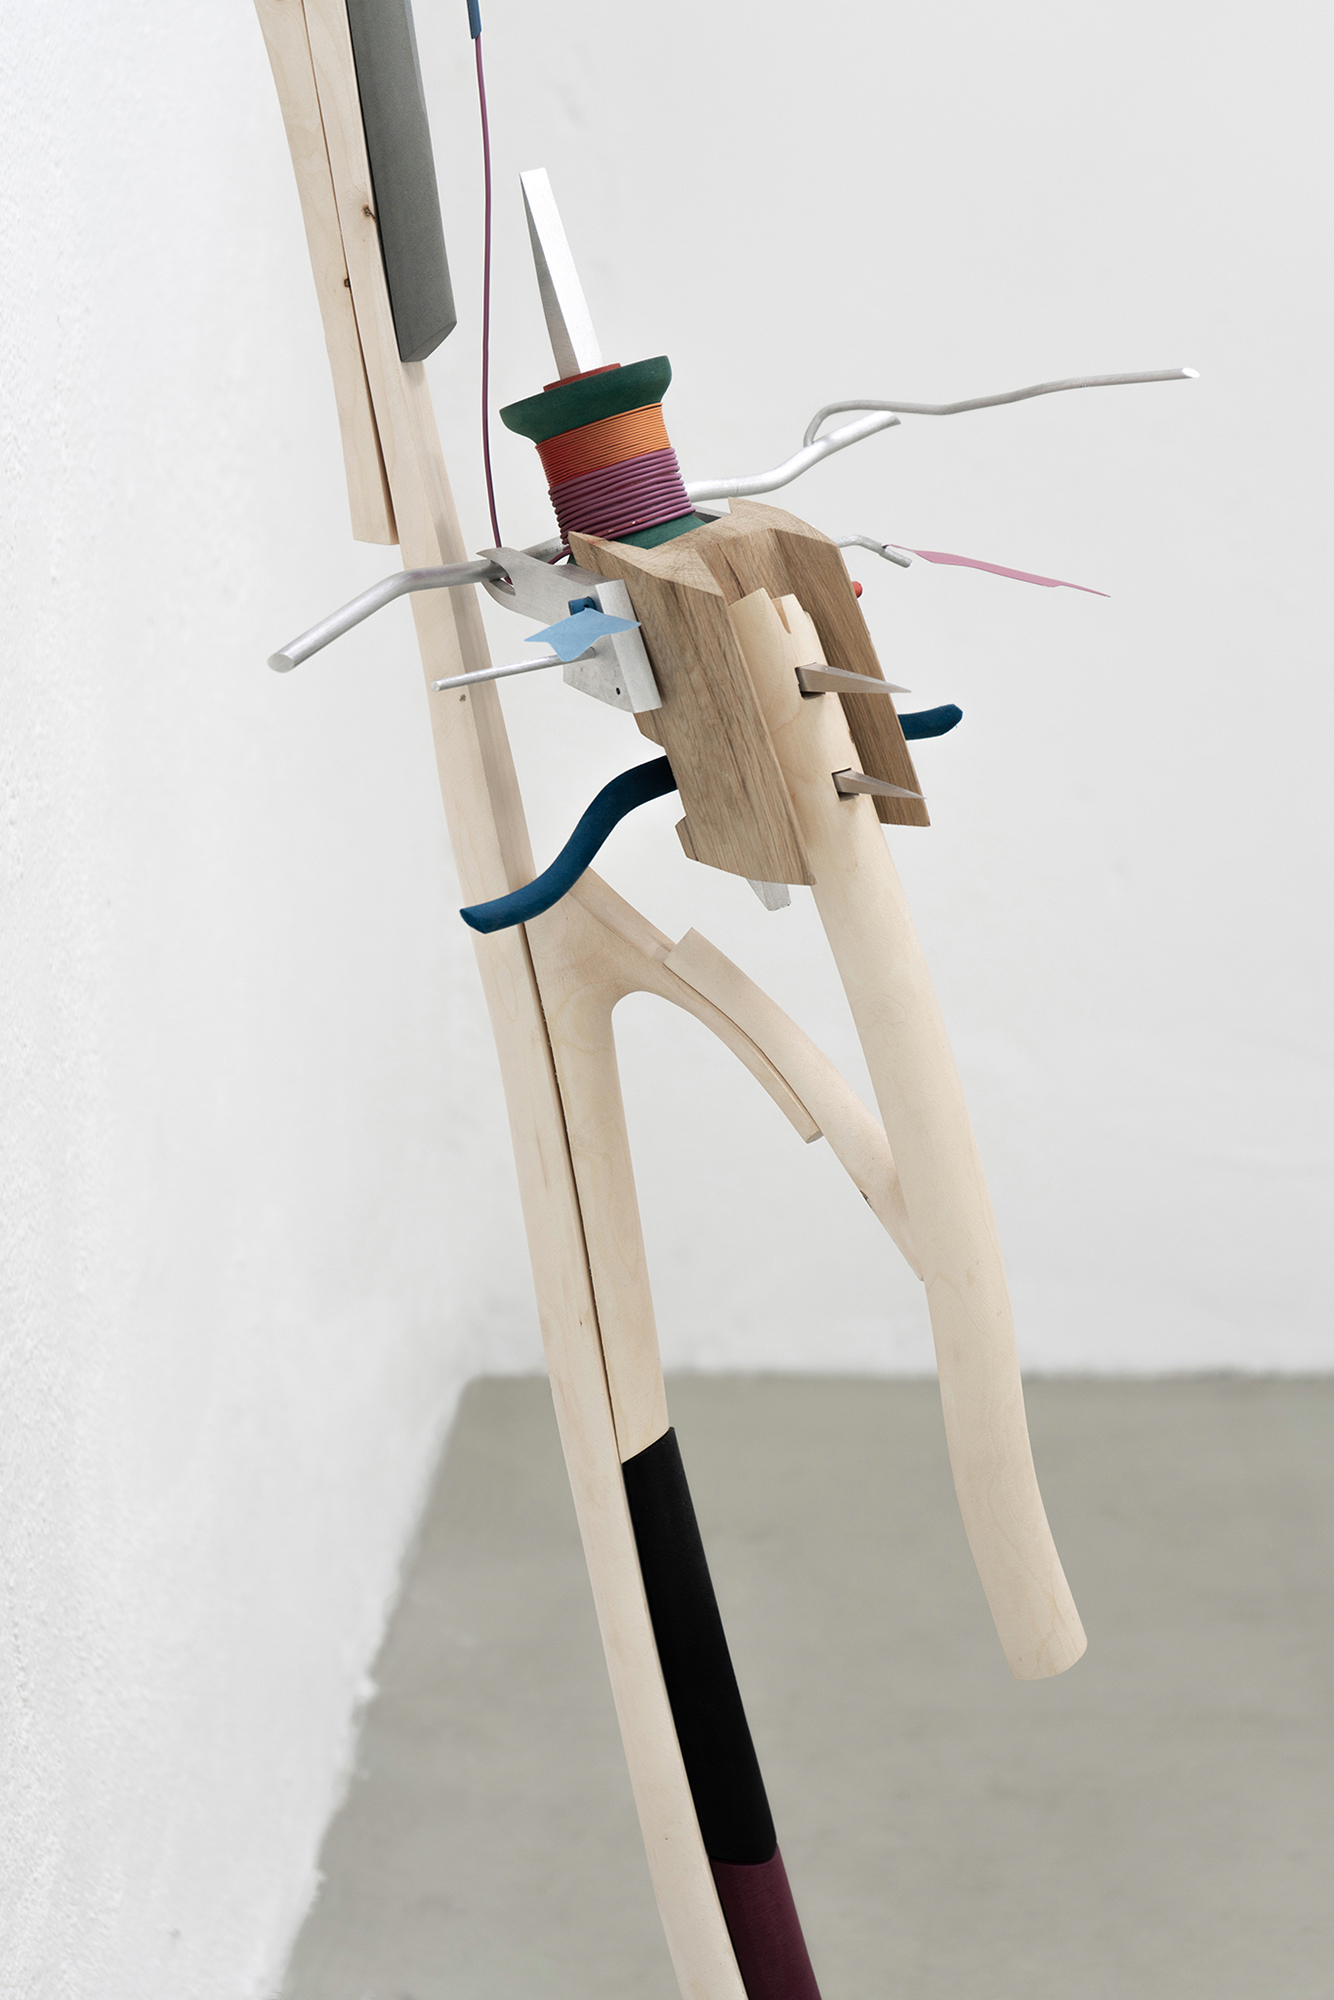 Lukas Hoffmann, fishing rod, 2022, maple, oak, MDF, aluminum, transparent paper, spray paint, 140 x 40 x 260 cm